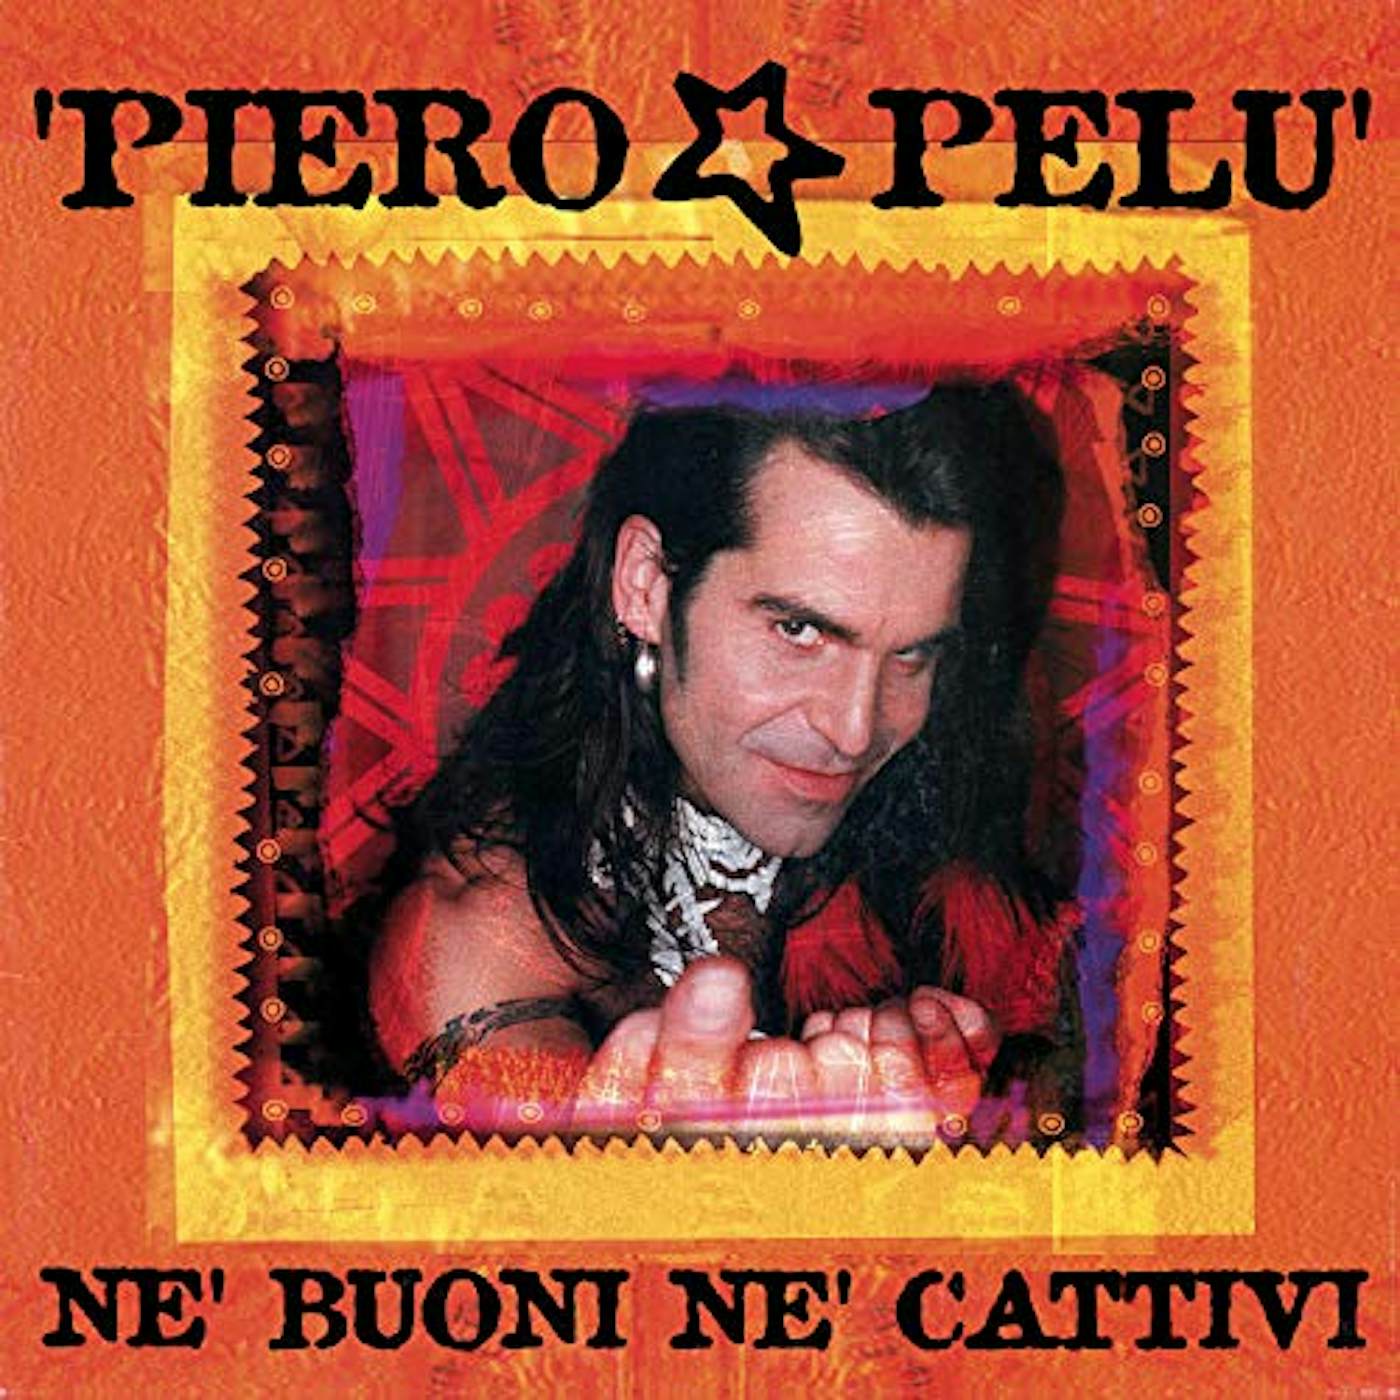 Piero Pelù NE BUONI NE CATTIVI Vinyl Record